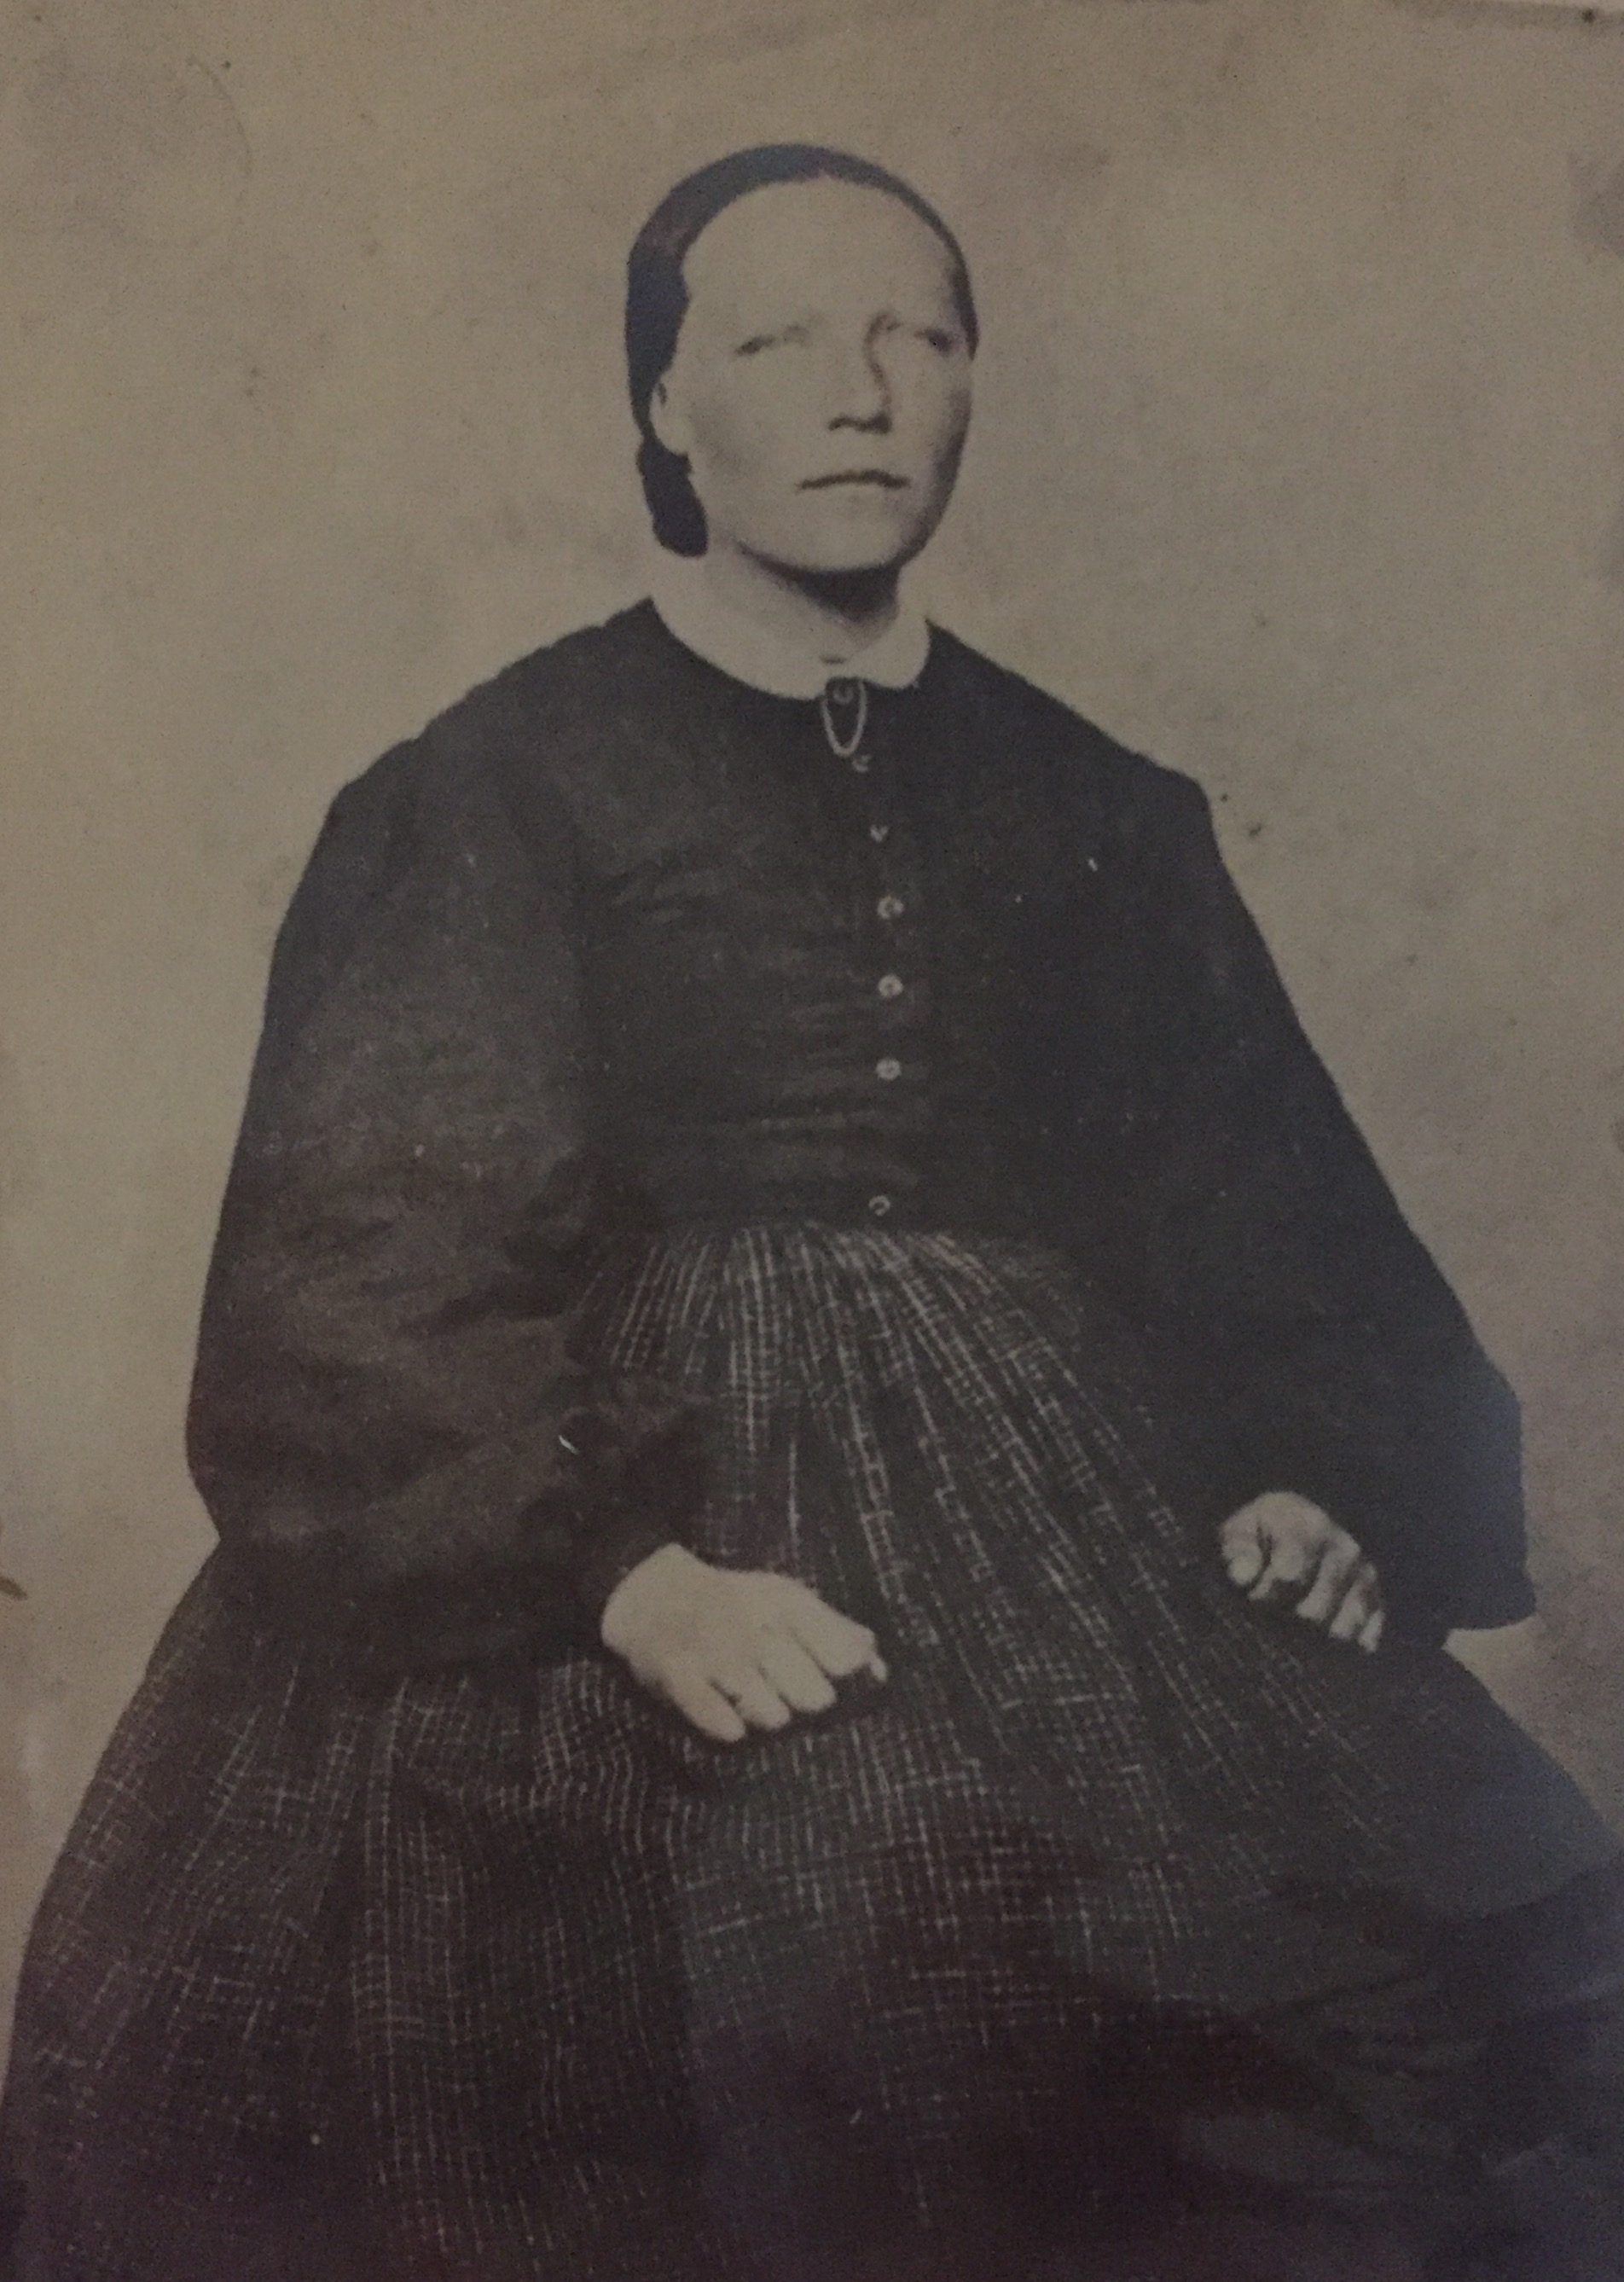 Jensine Marie Nilsen
Born May 12, 1846 
At Kvitver Luro, Nordland, Norway 
Died March 23, 1908 